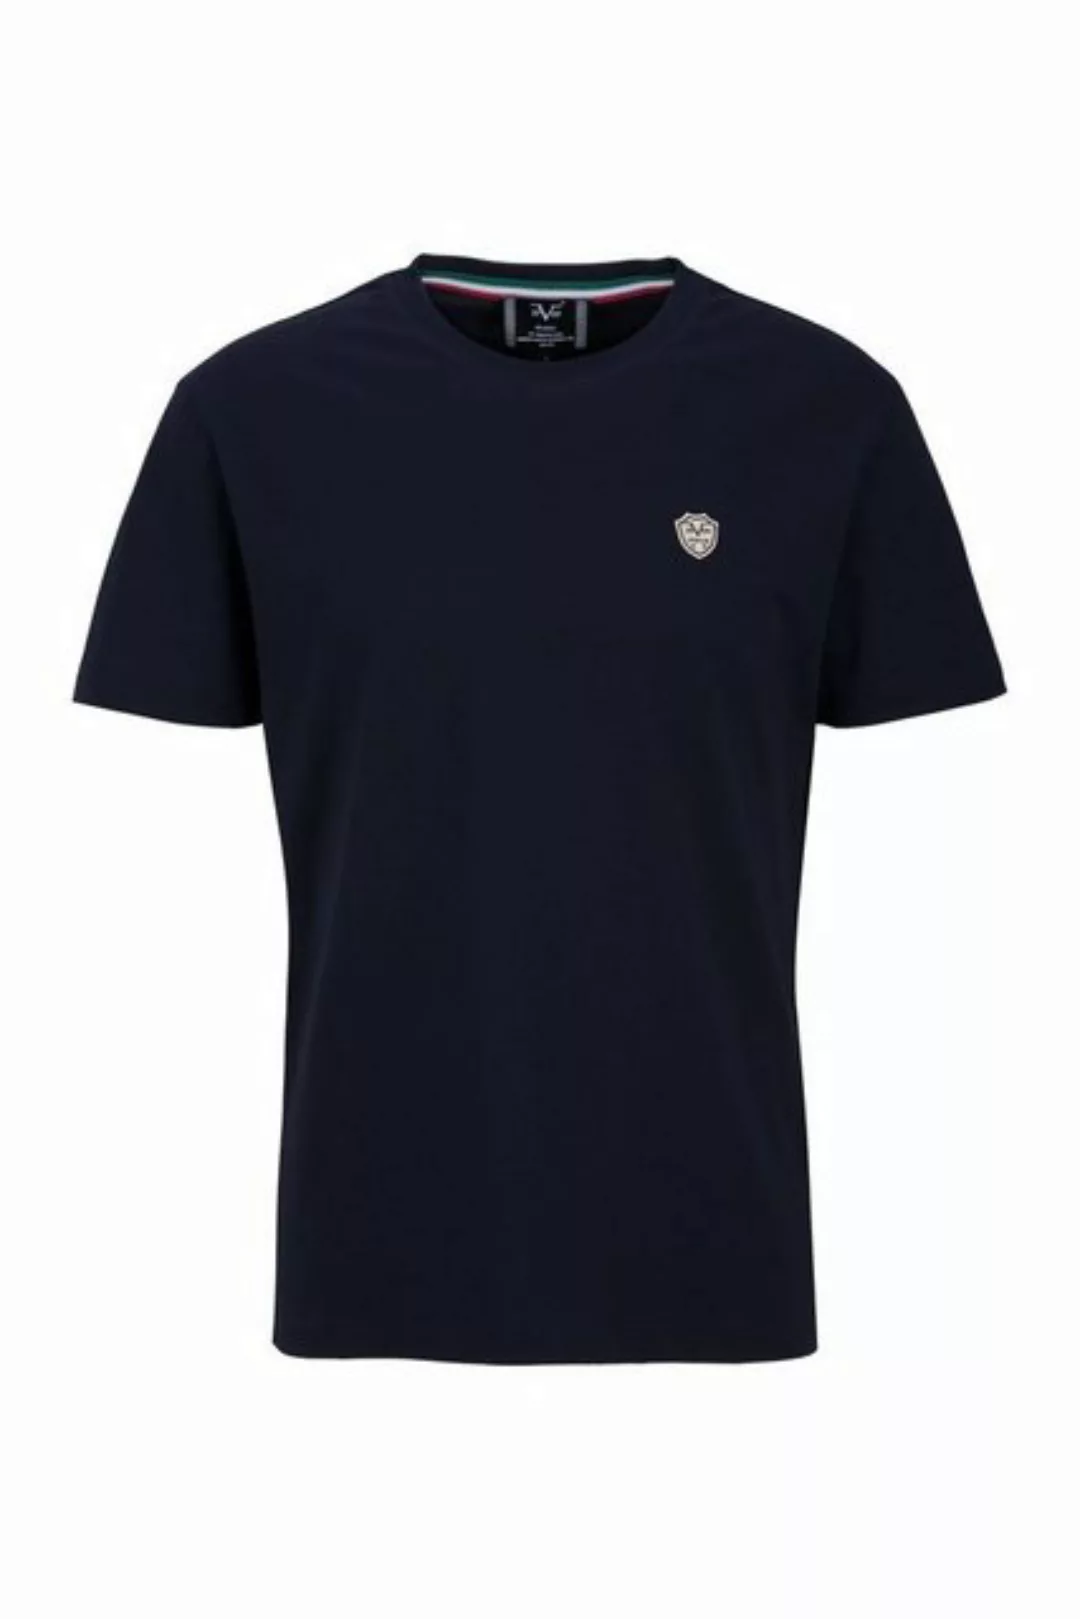 19V69 Italia by Versace T-Shirt by Versace Sportivo SRL - Rafael Shield günstig online kaufen